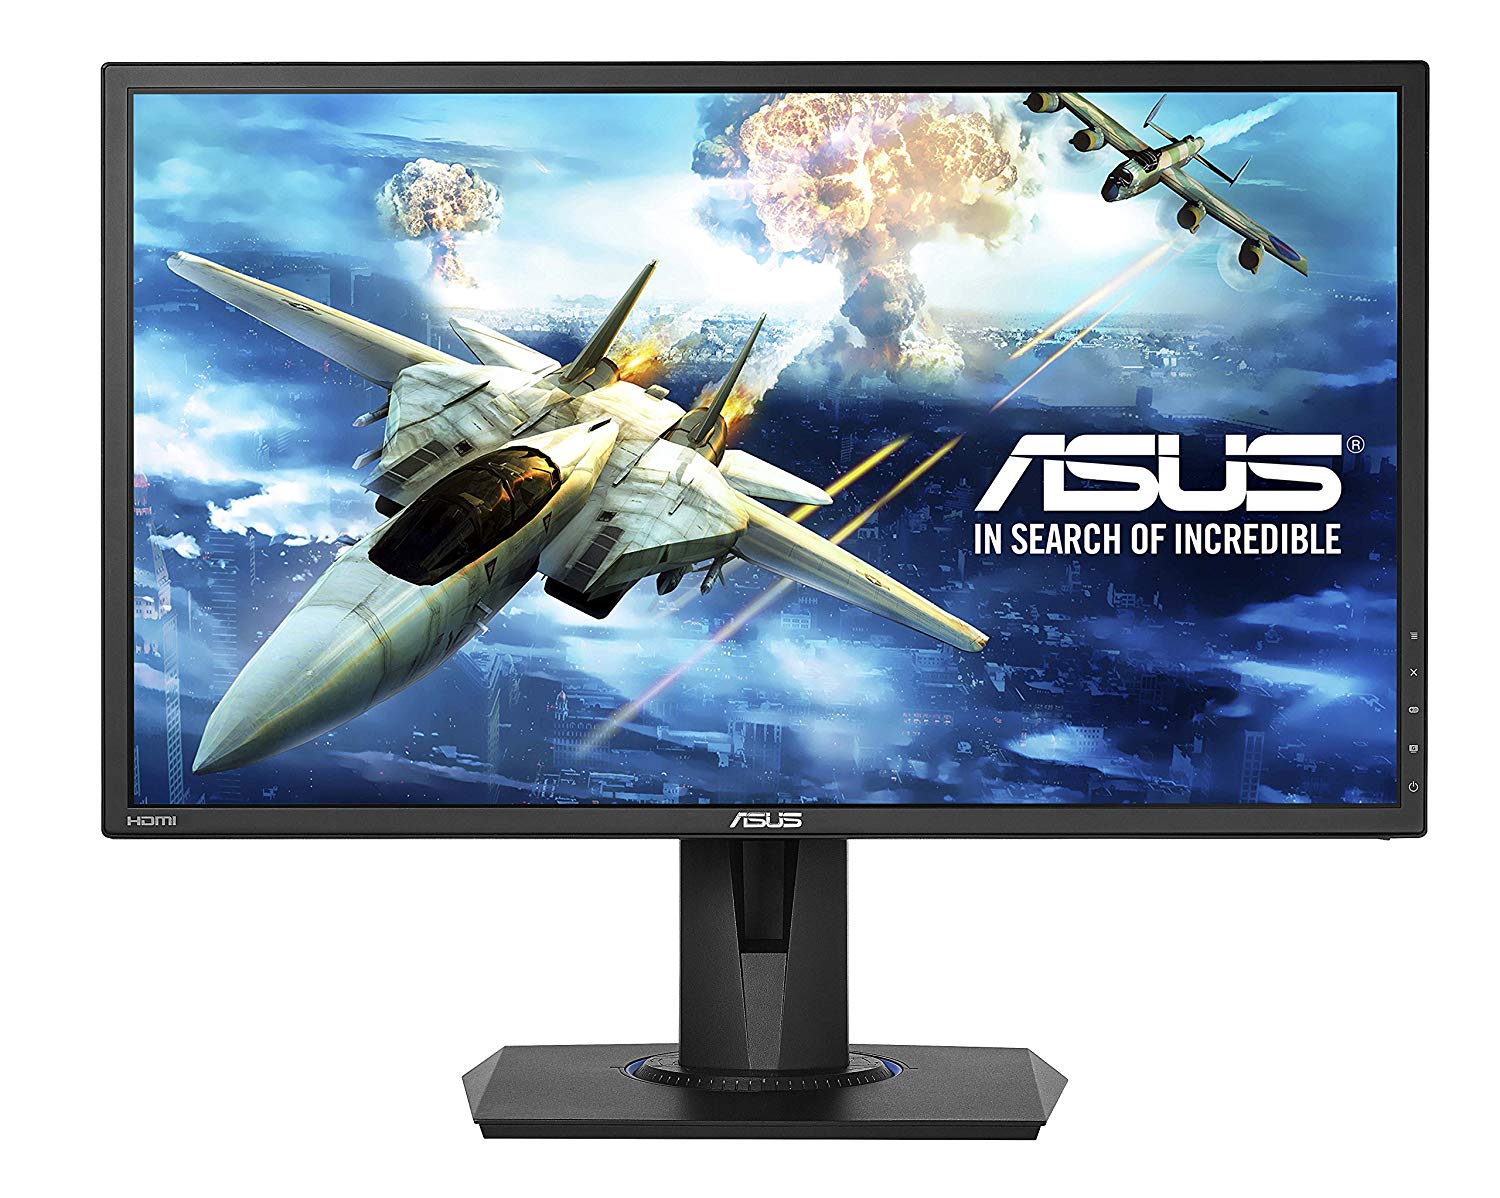 ASUS VG245H 24” Full HD 1080p gaming monitor